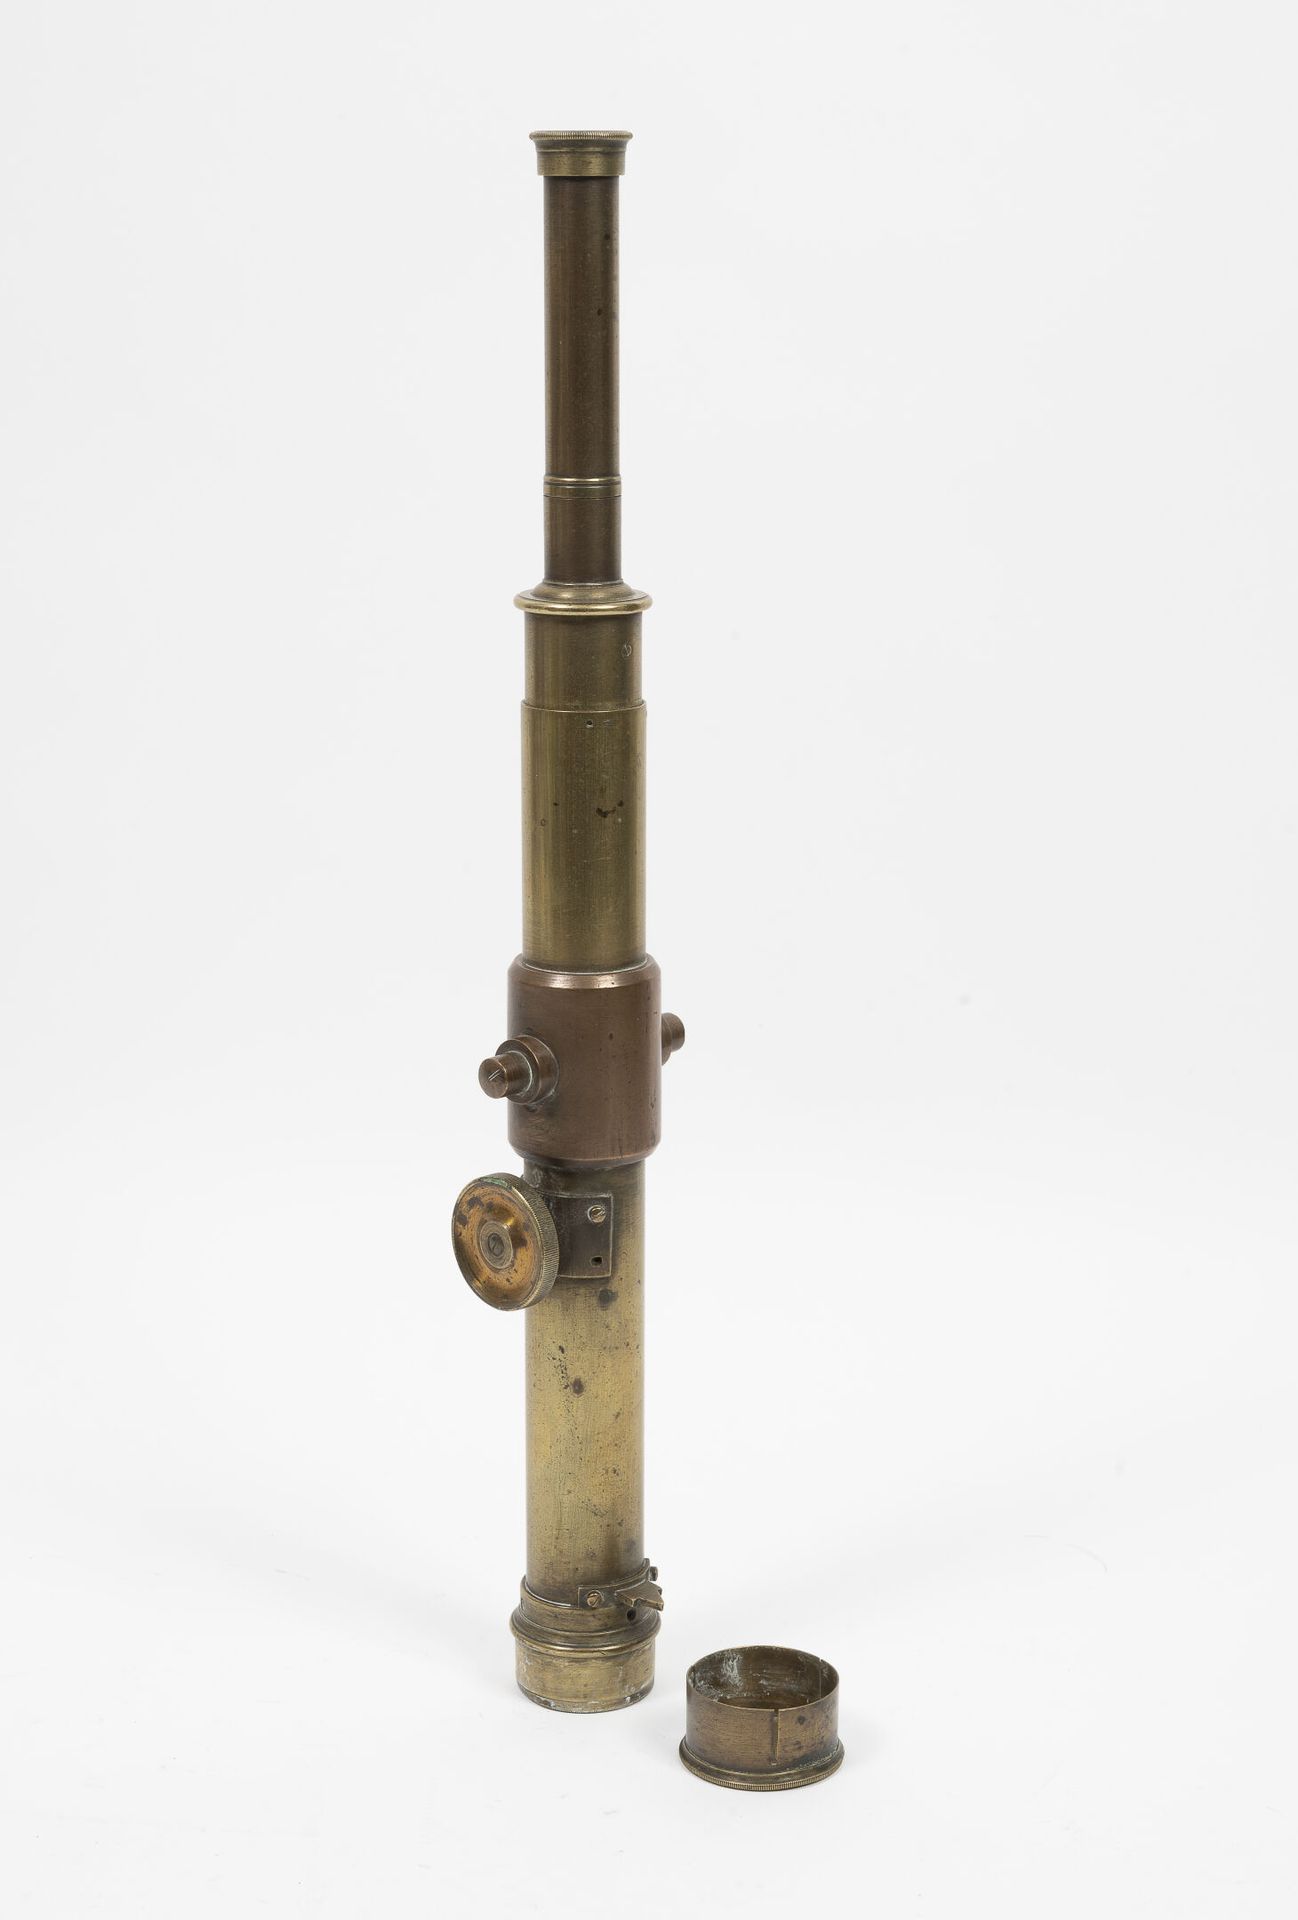 EUROPE, fin du XIXème siècle 黄铜和铜制小望远镜主体，带有横向调节轮。

未签署。

长度：40厘米。

没有底座。

刮痕、磨损和&hellip;